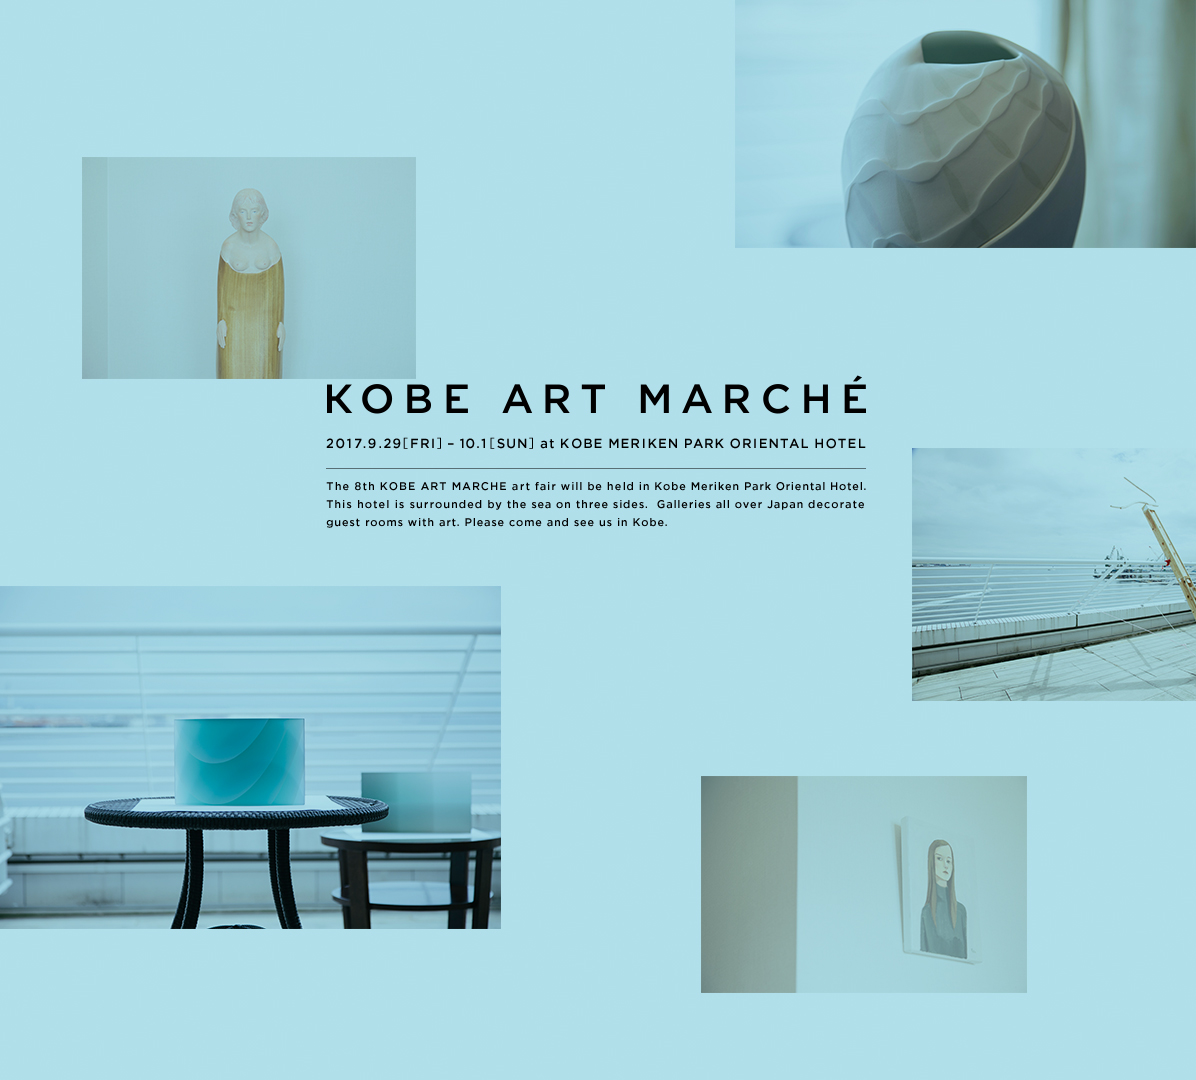 KOBE ART MARCHE 2017